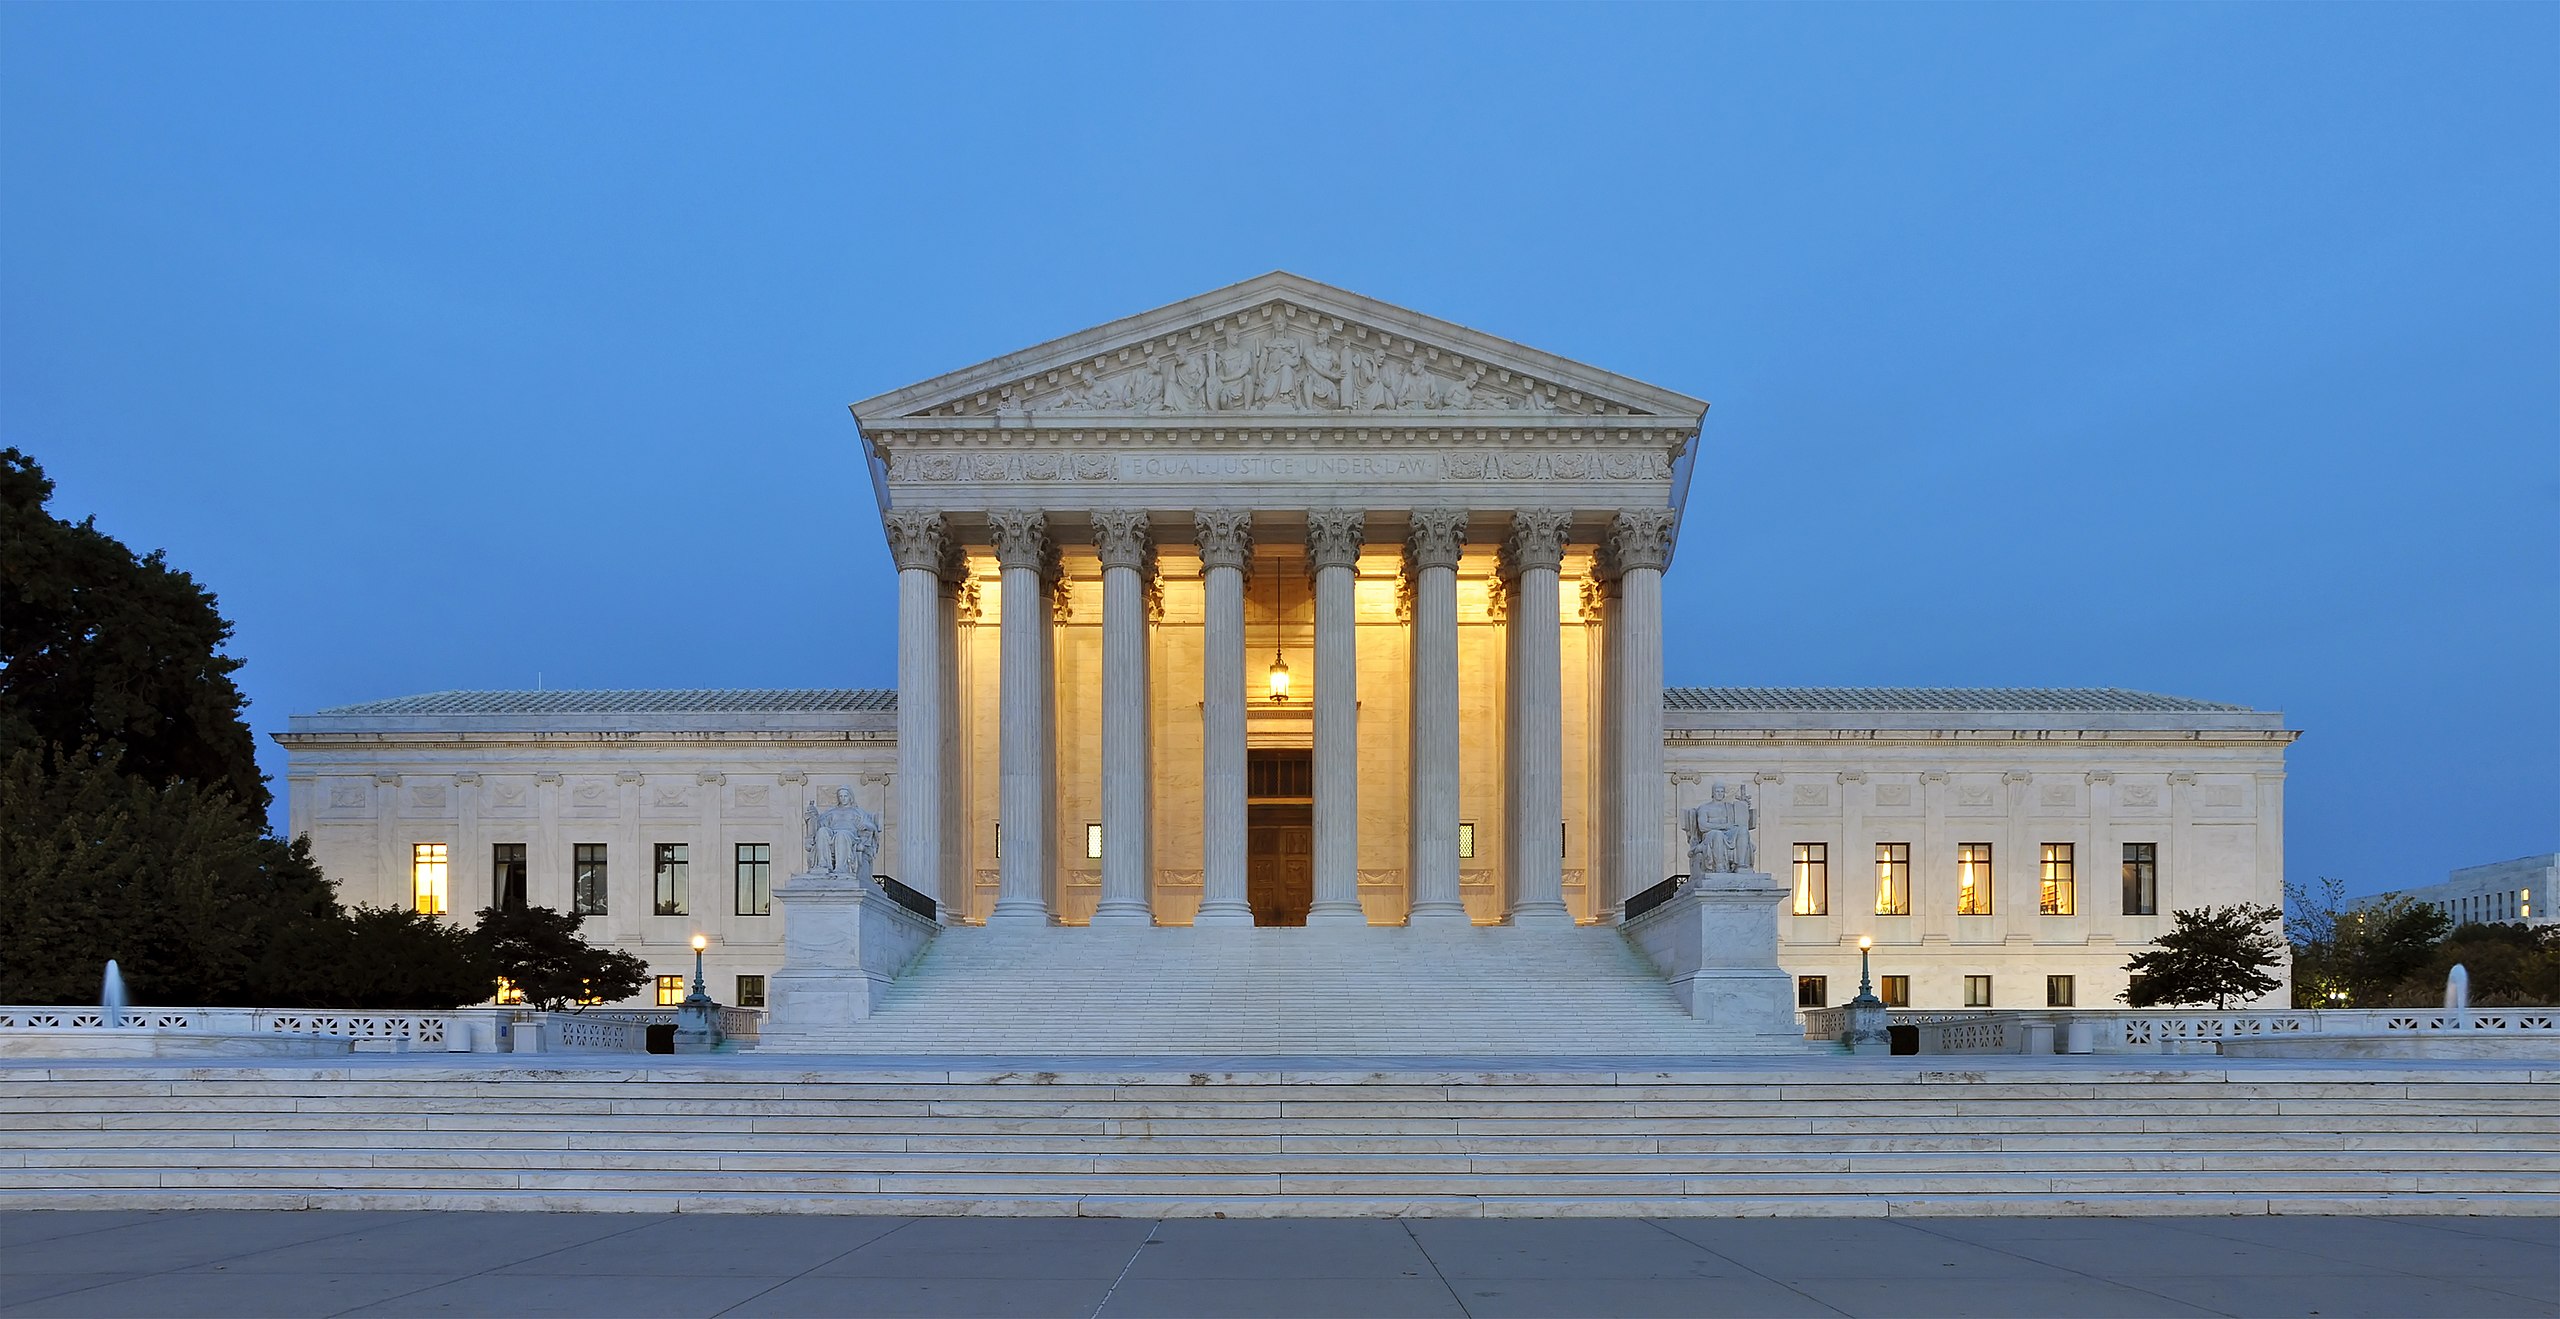 U.S. Supreme Court building, Washington, D.C. Photo credit: Joe Ravi